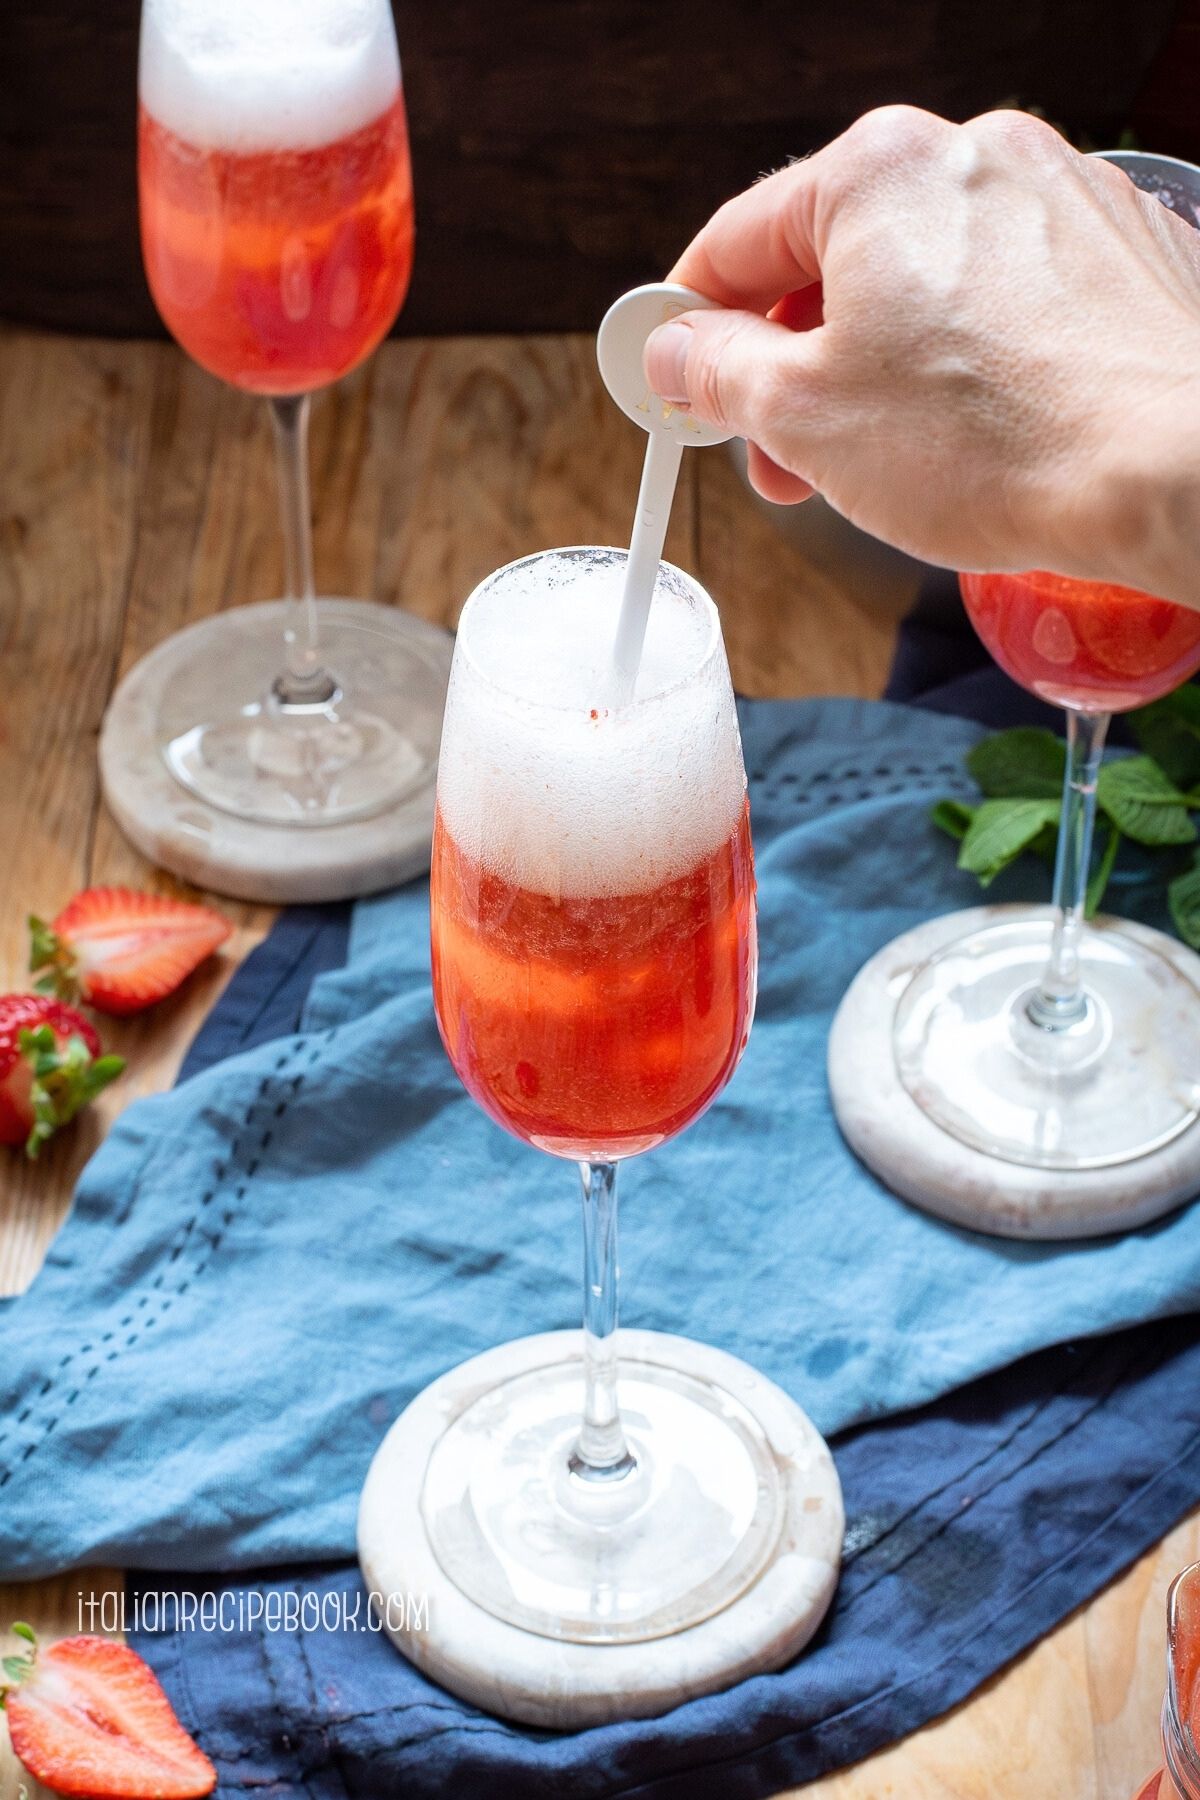 gently stir rossini cocktail